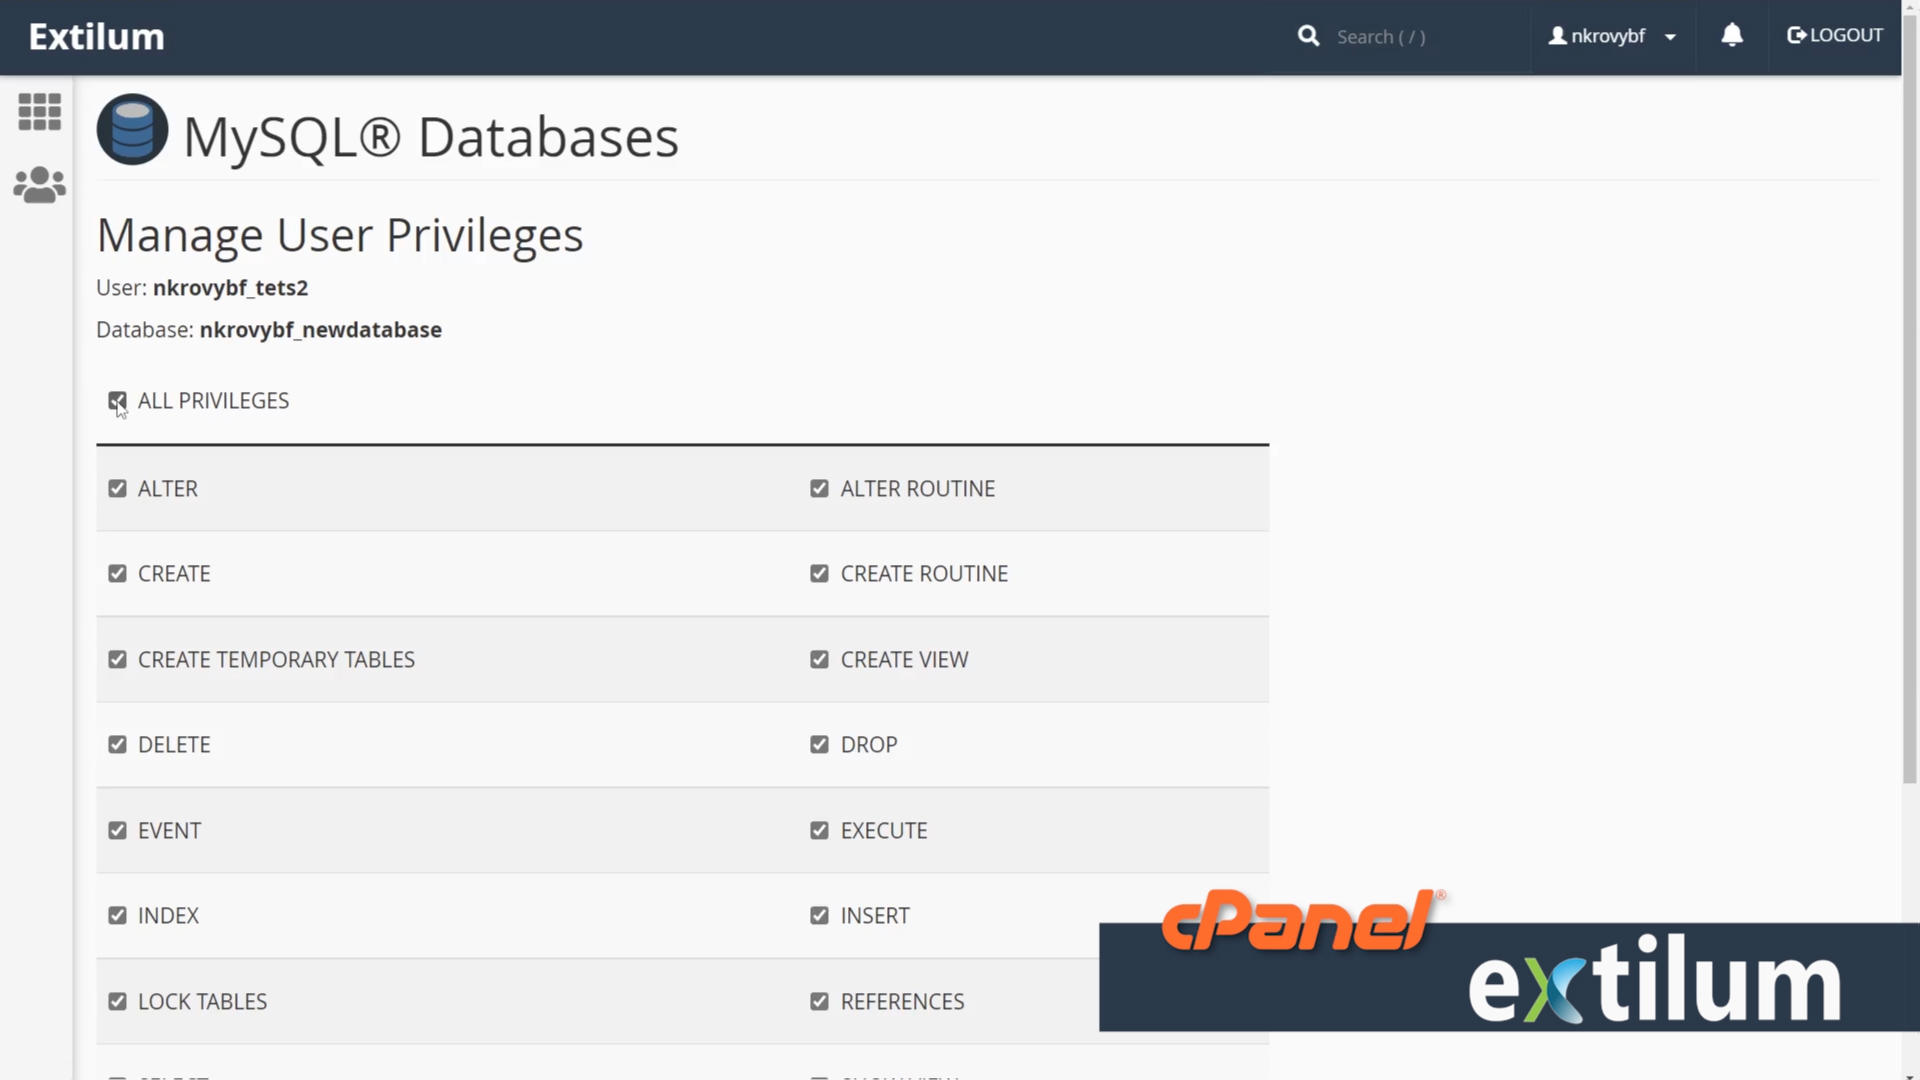 Extilum cPanel - databases - MySQL Database - add user to database